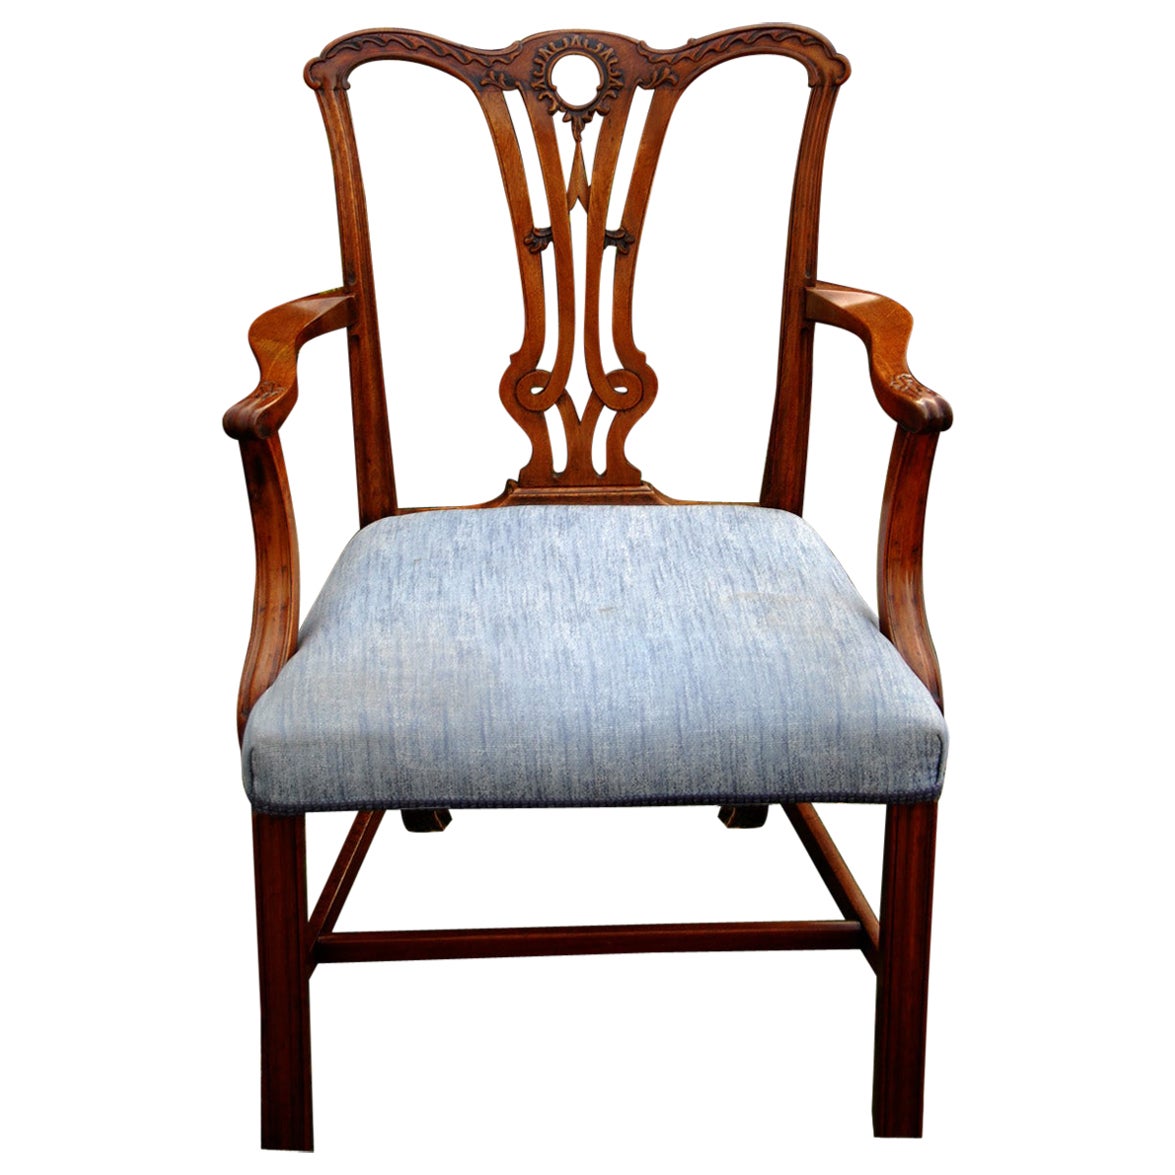 Englischer georgianischer Chippendale-Sessel aus geschnitztem Mahagoni mit gepolsterter Sitzfläche